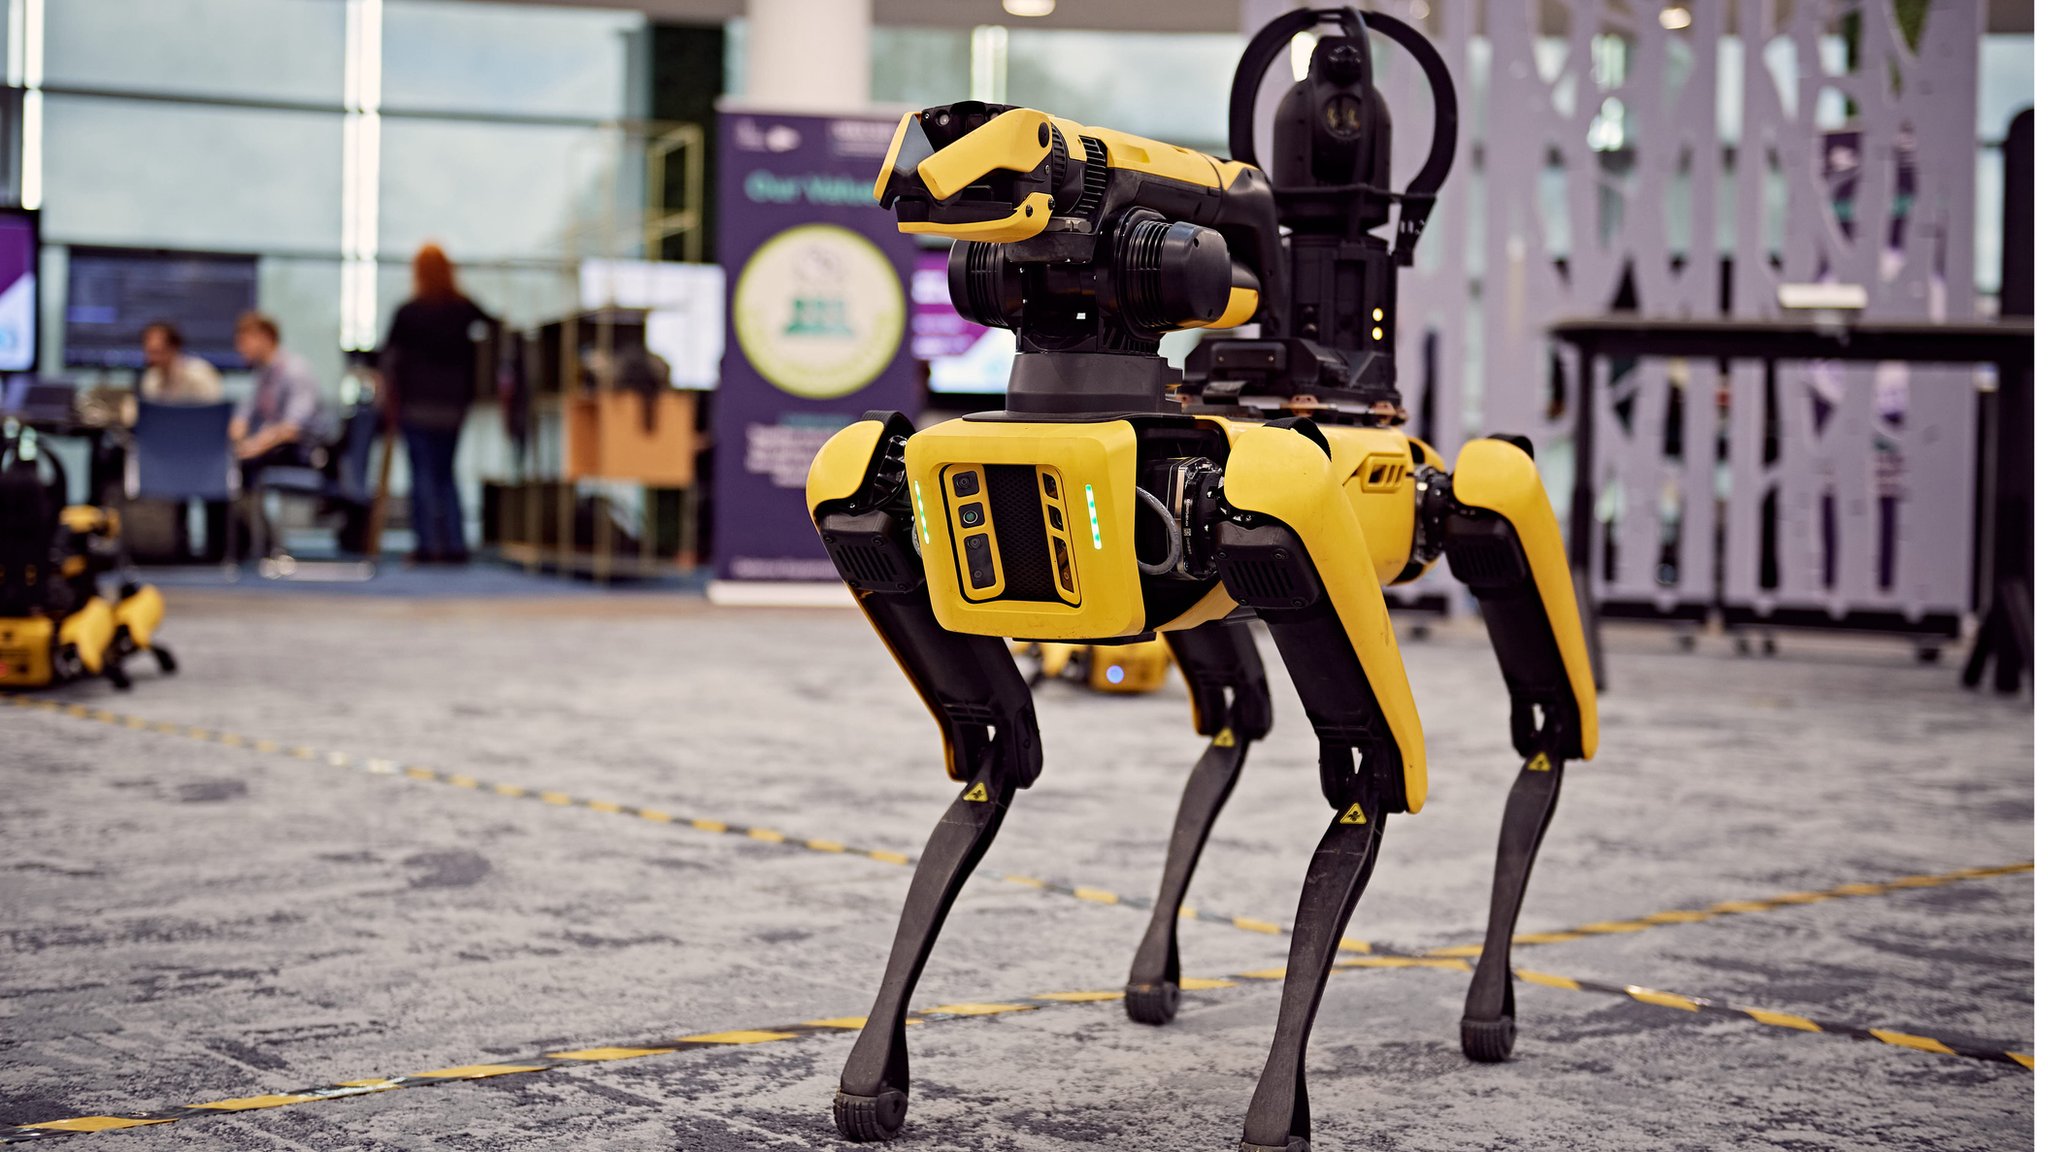 Robot Dog Olympics takes place at MoD Bristol - BBC News